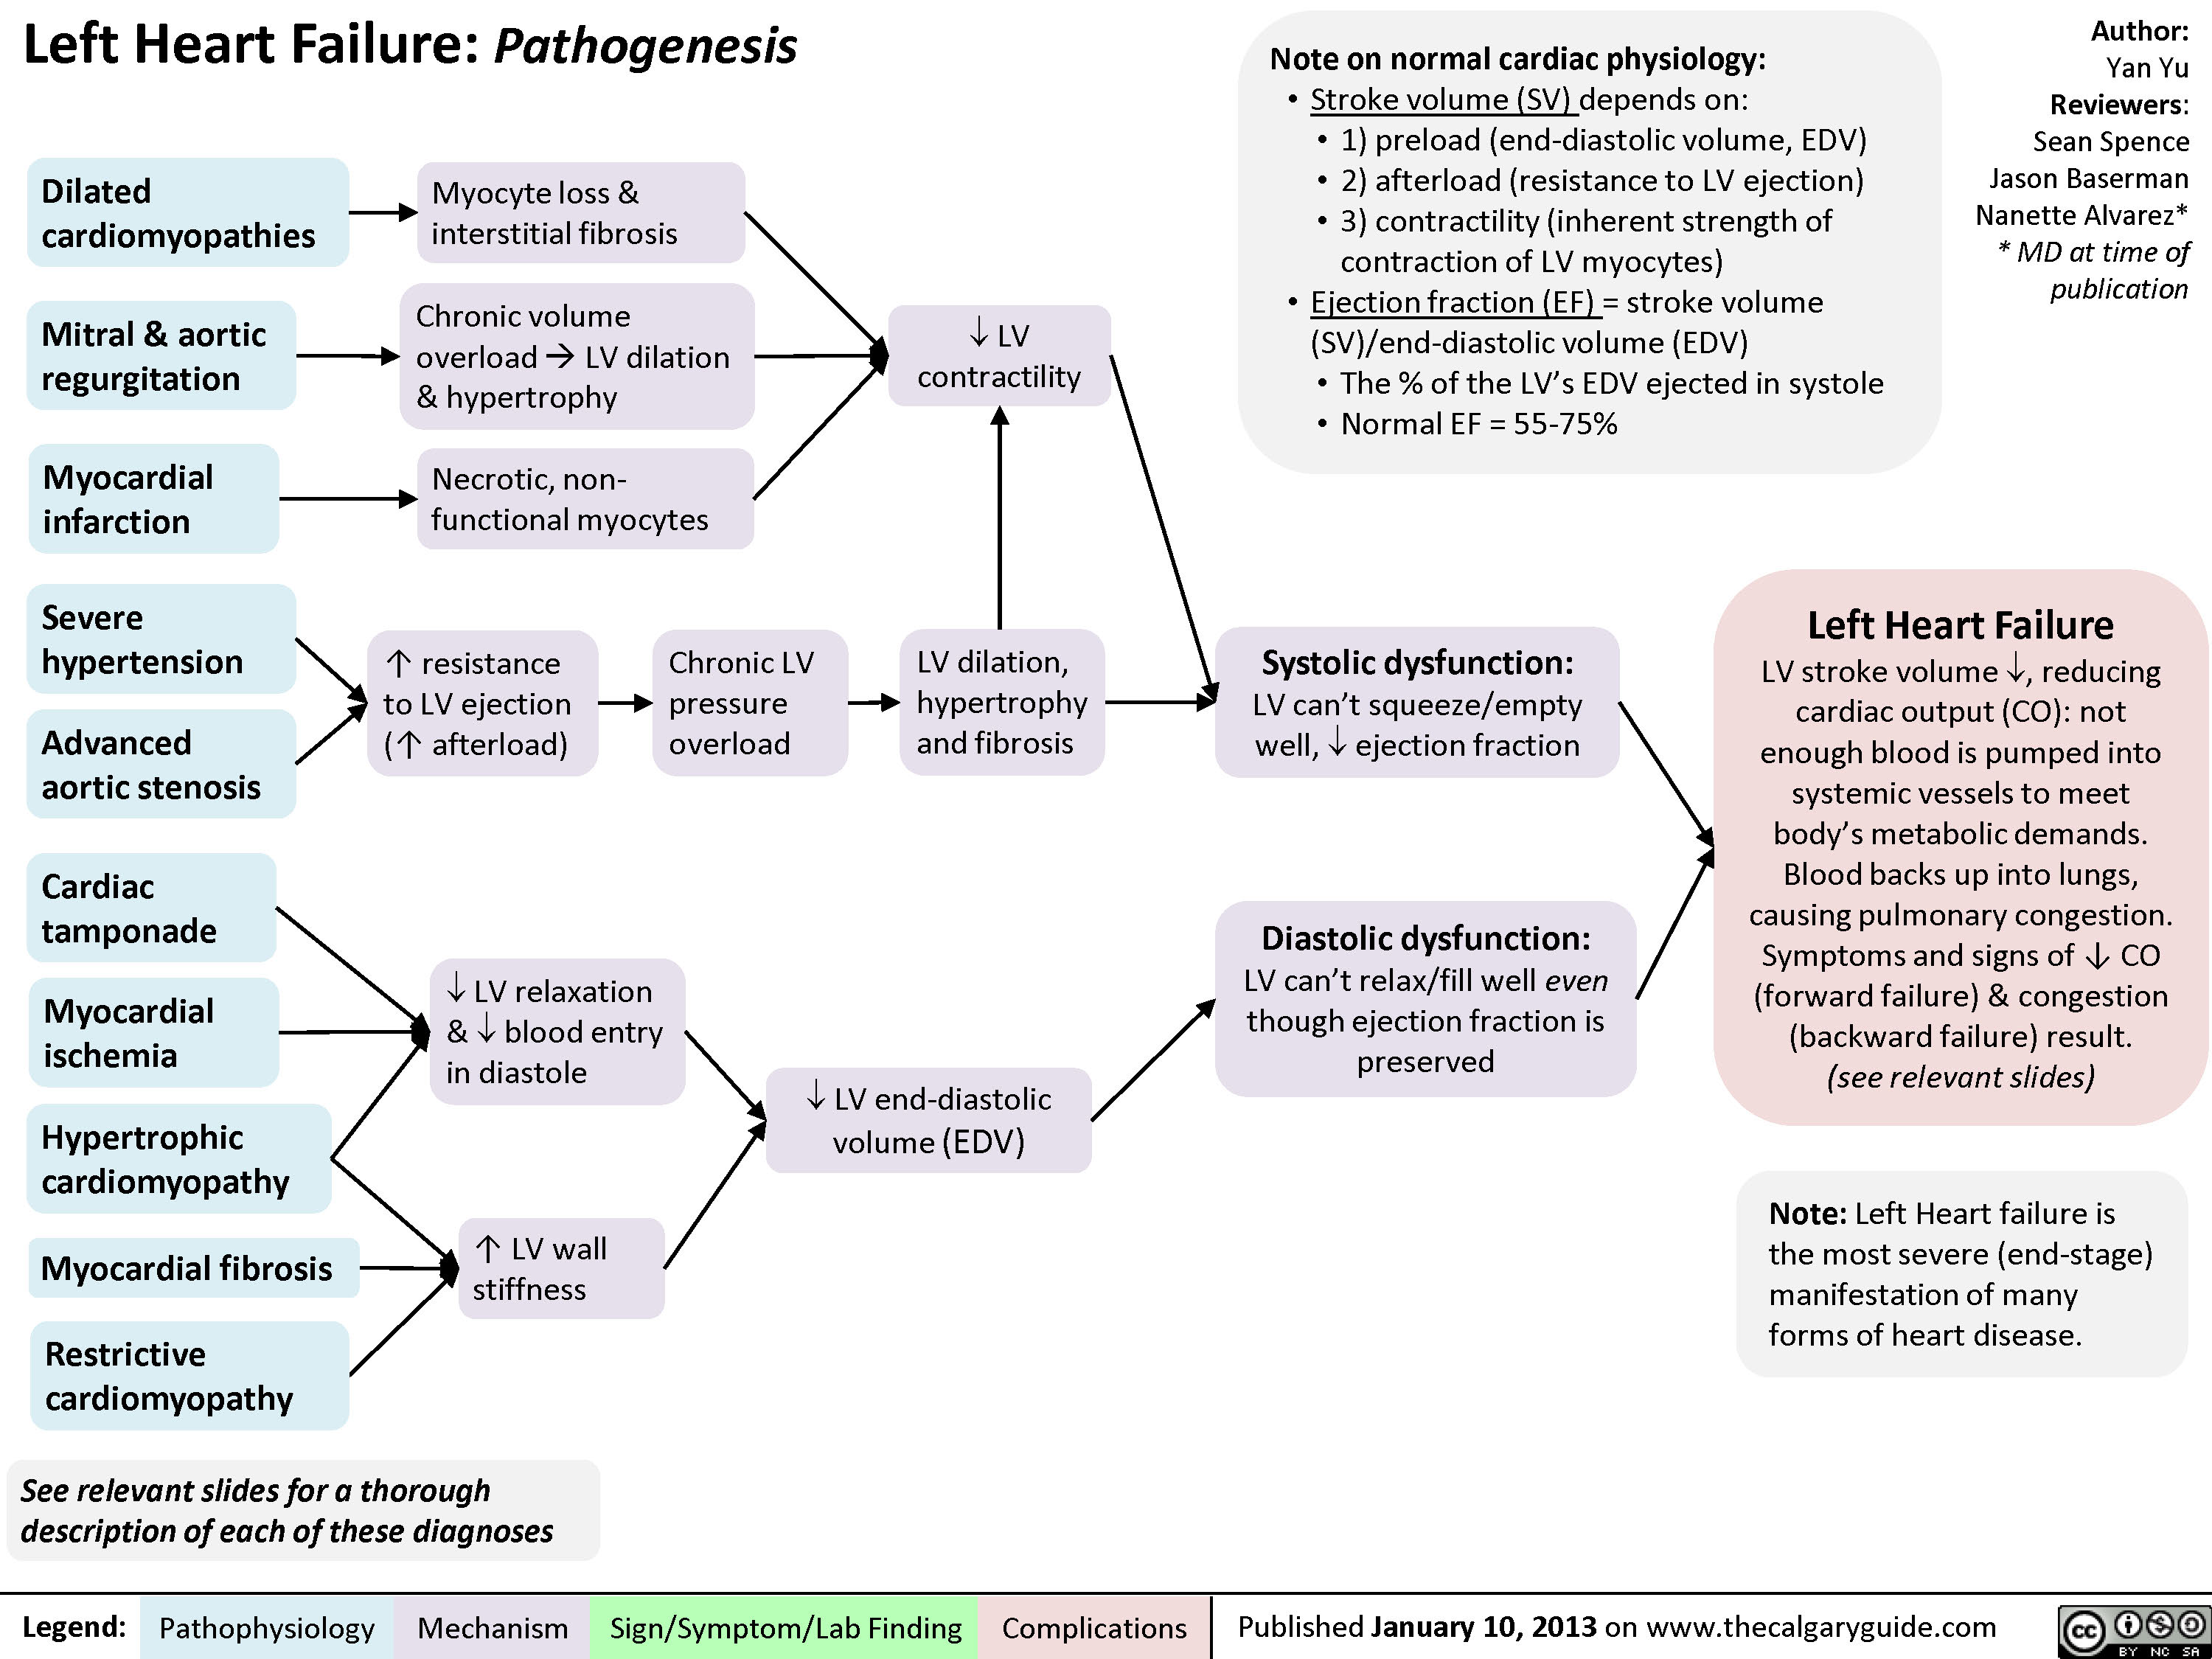 Left Heart Failure - Pathogenesis